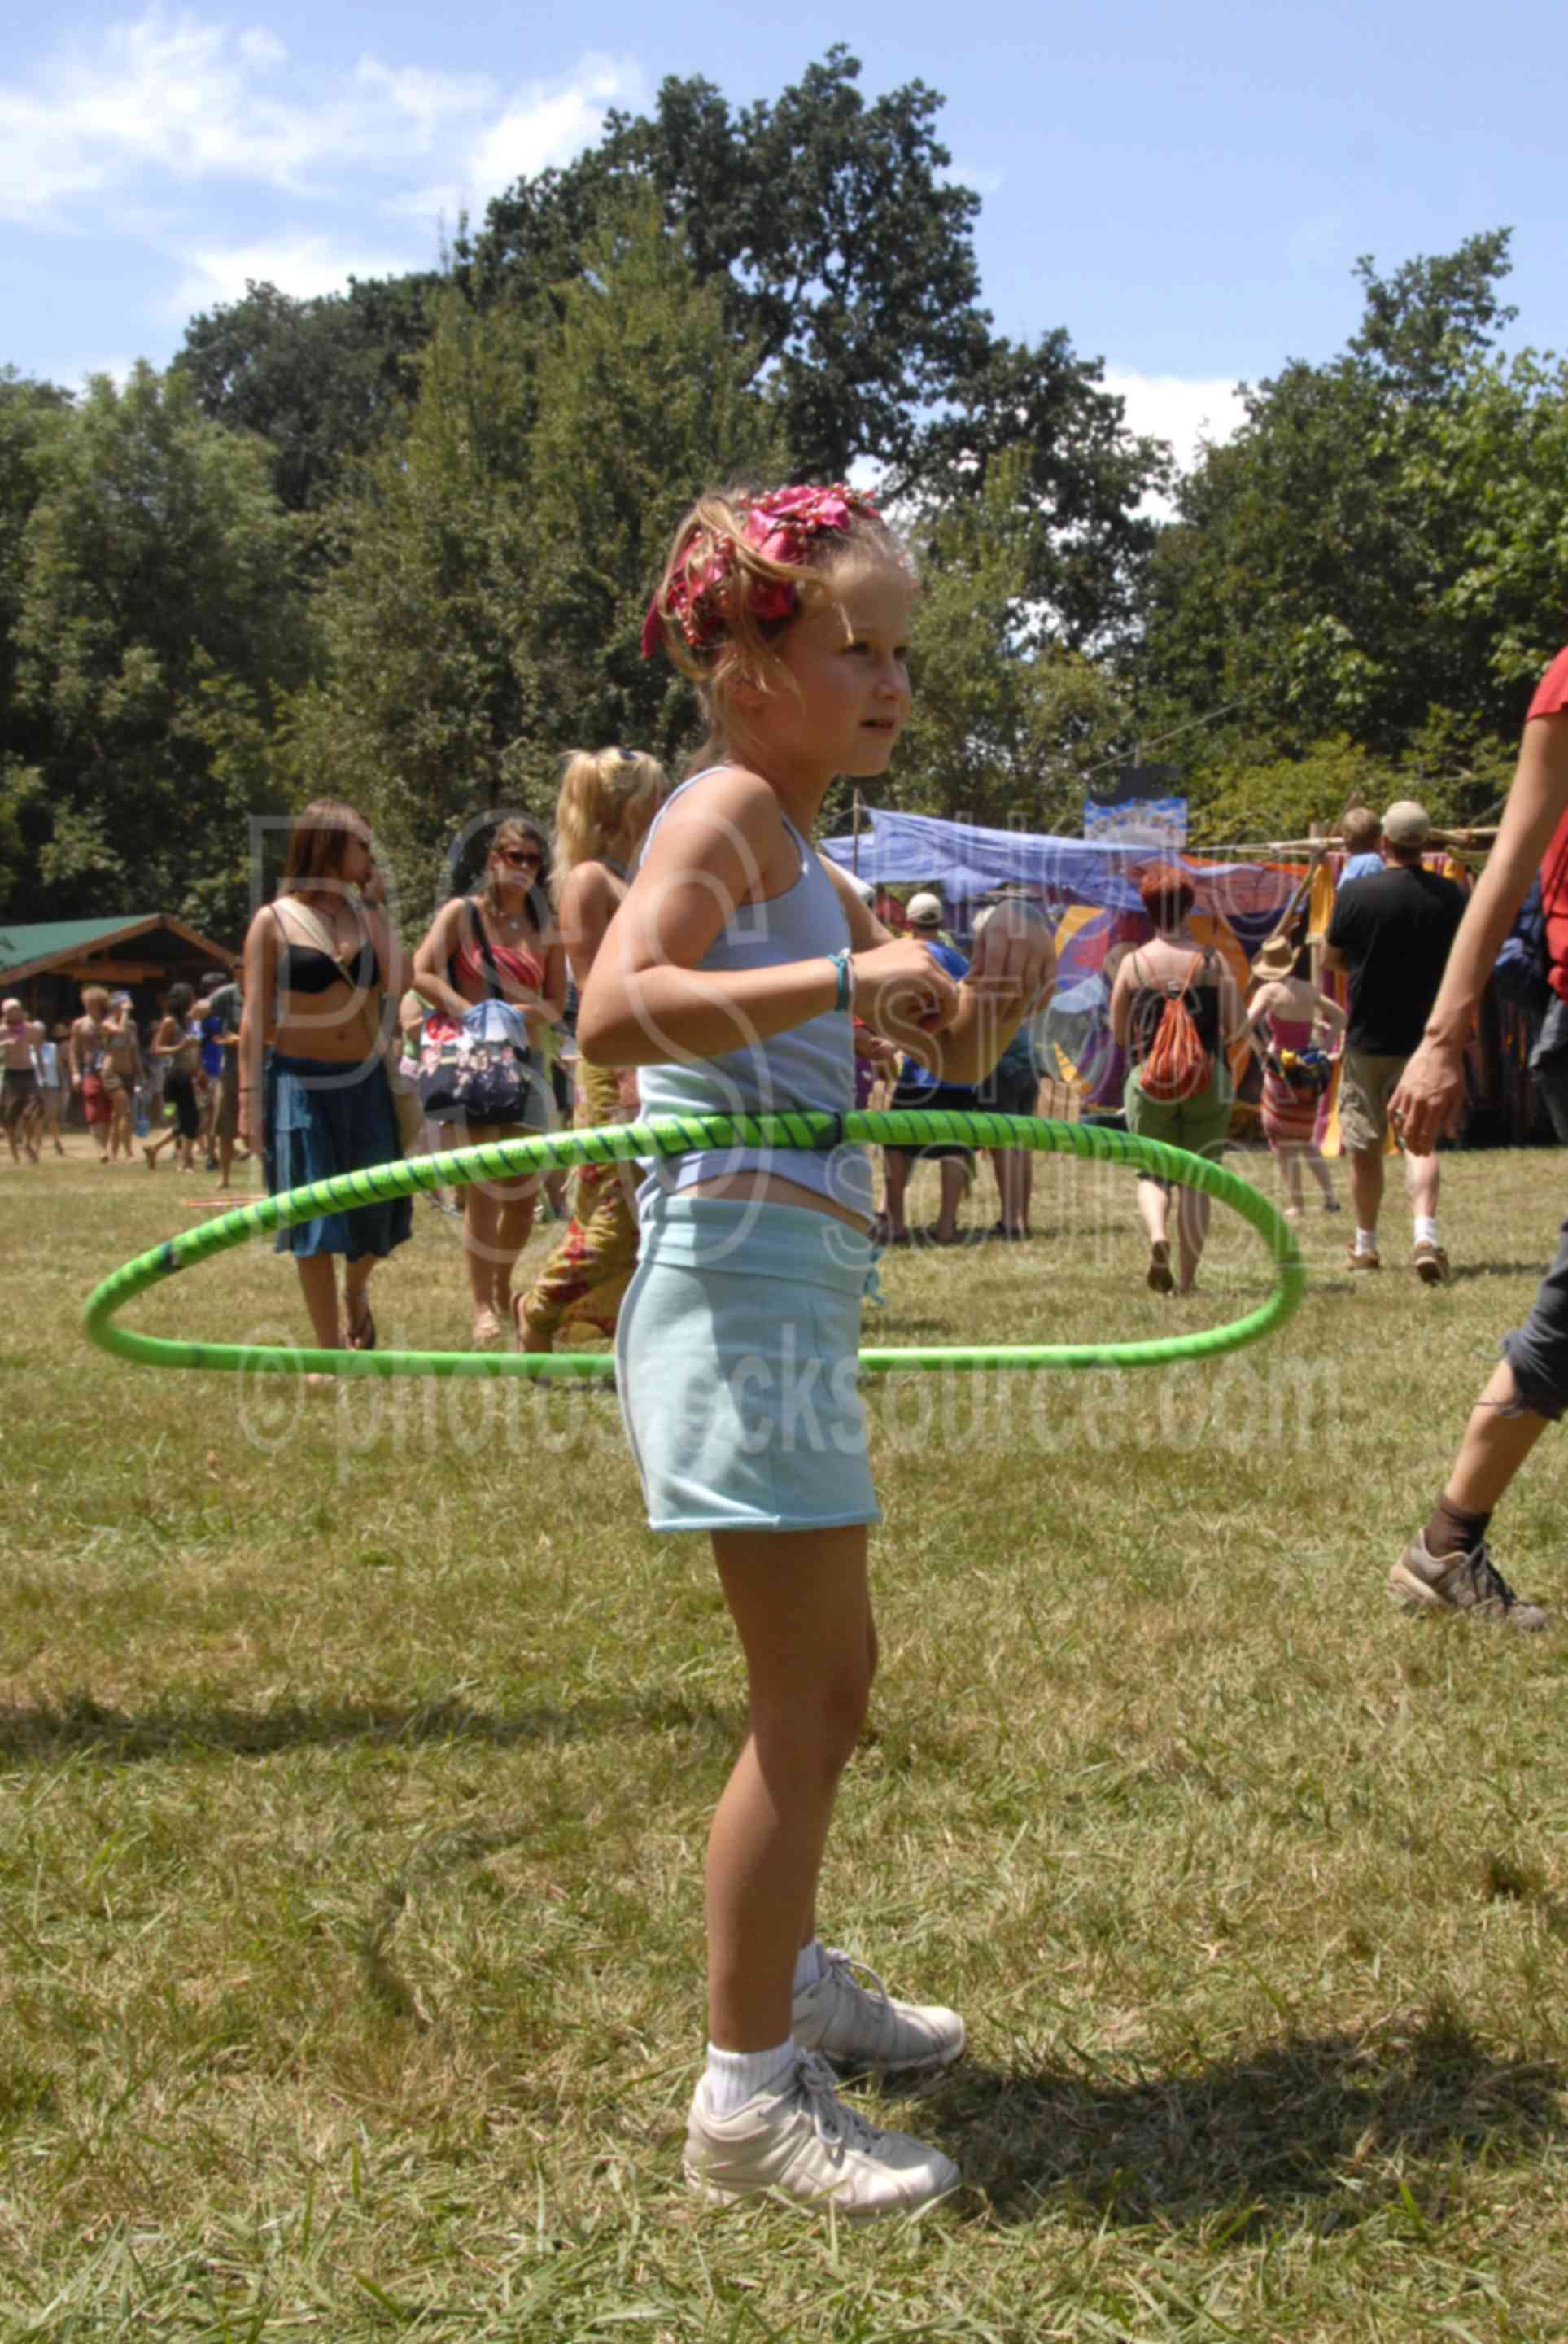 Hula Hoop Girl,entertainment,fair,country,people,girl,hula hoop,play,playing,children